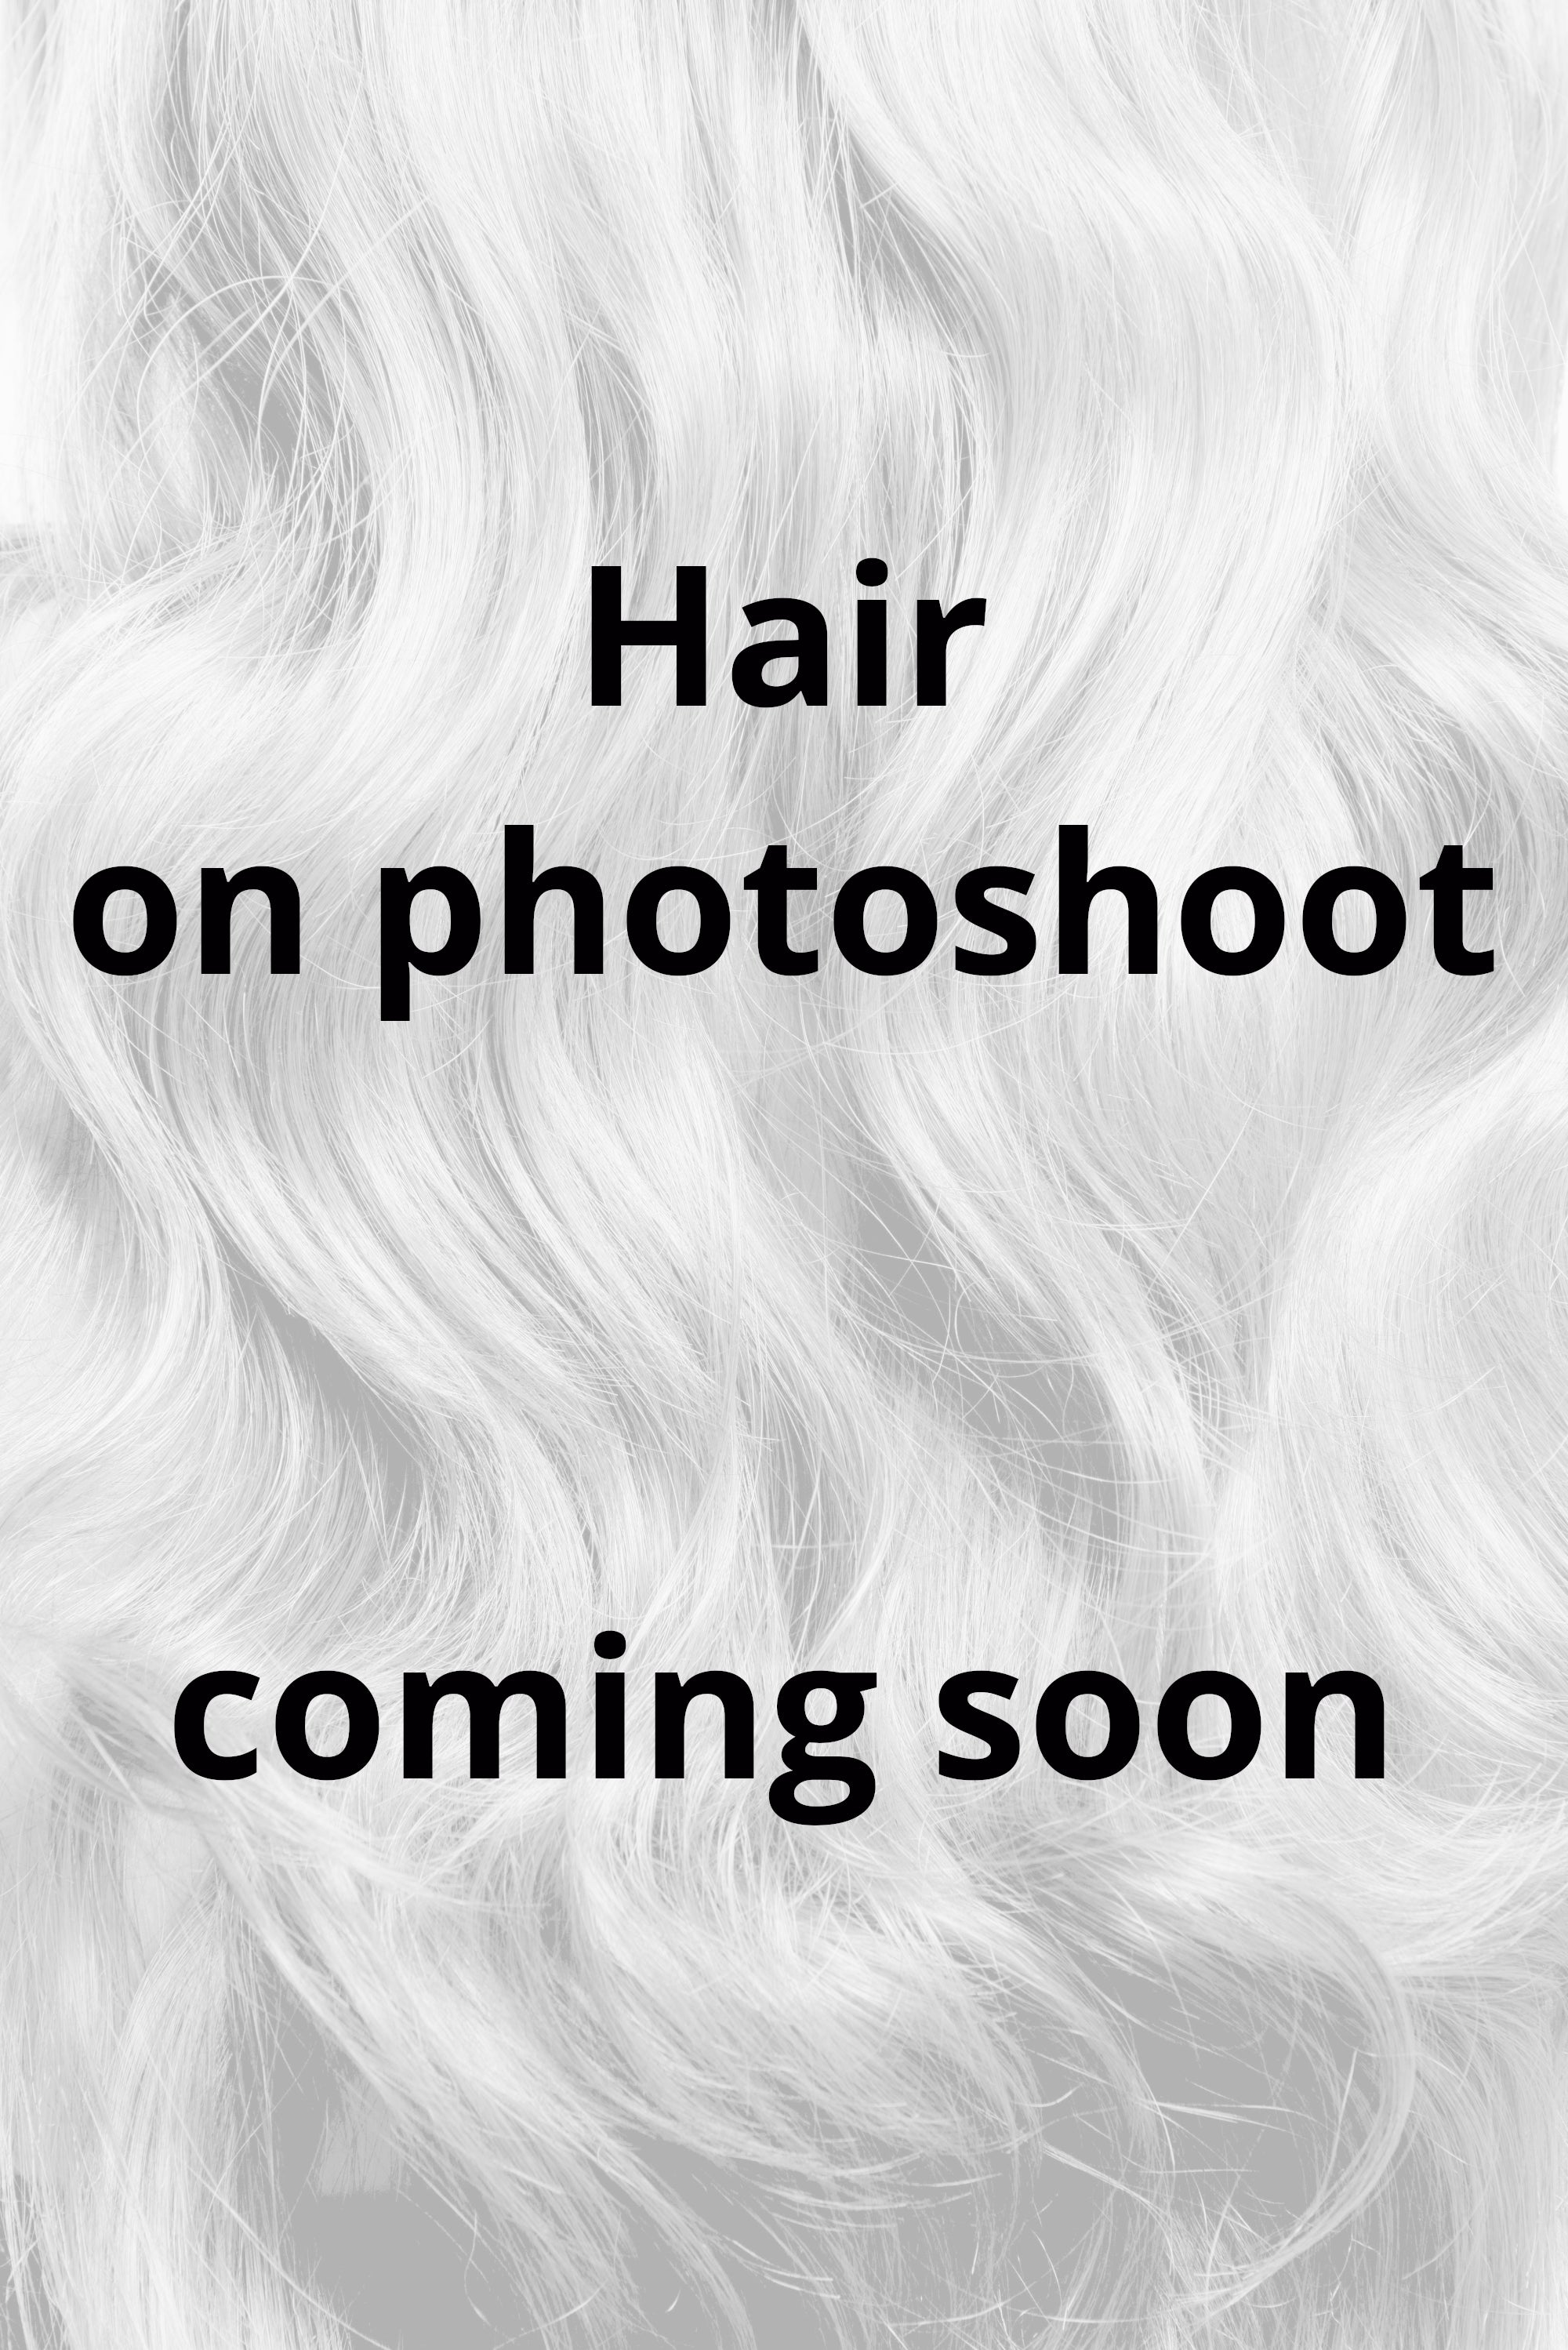 Behair professional Bulk hair "Premium" 20" (50cm) Natural Wave Ice Blond #000 - 25g hair extensions